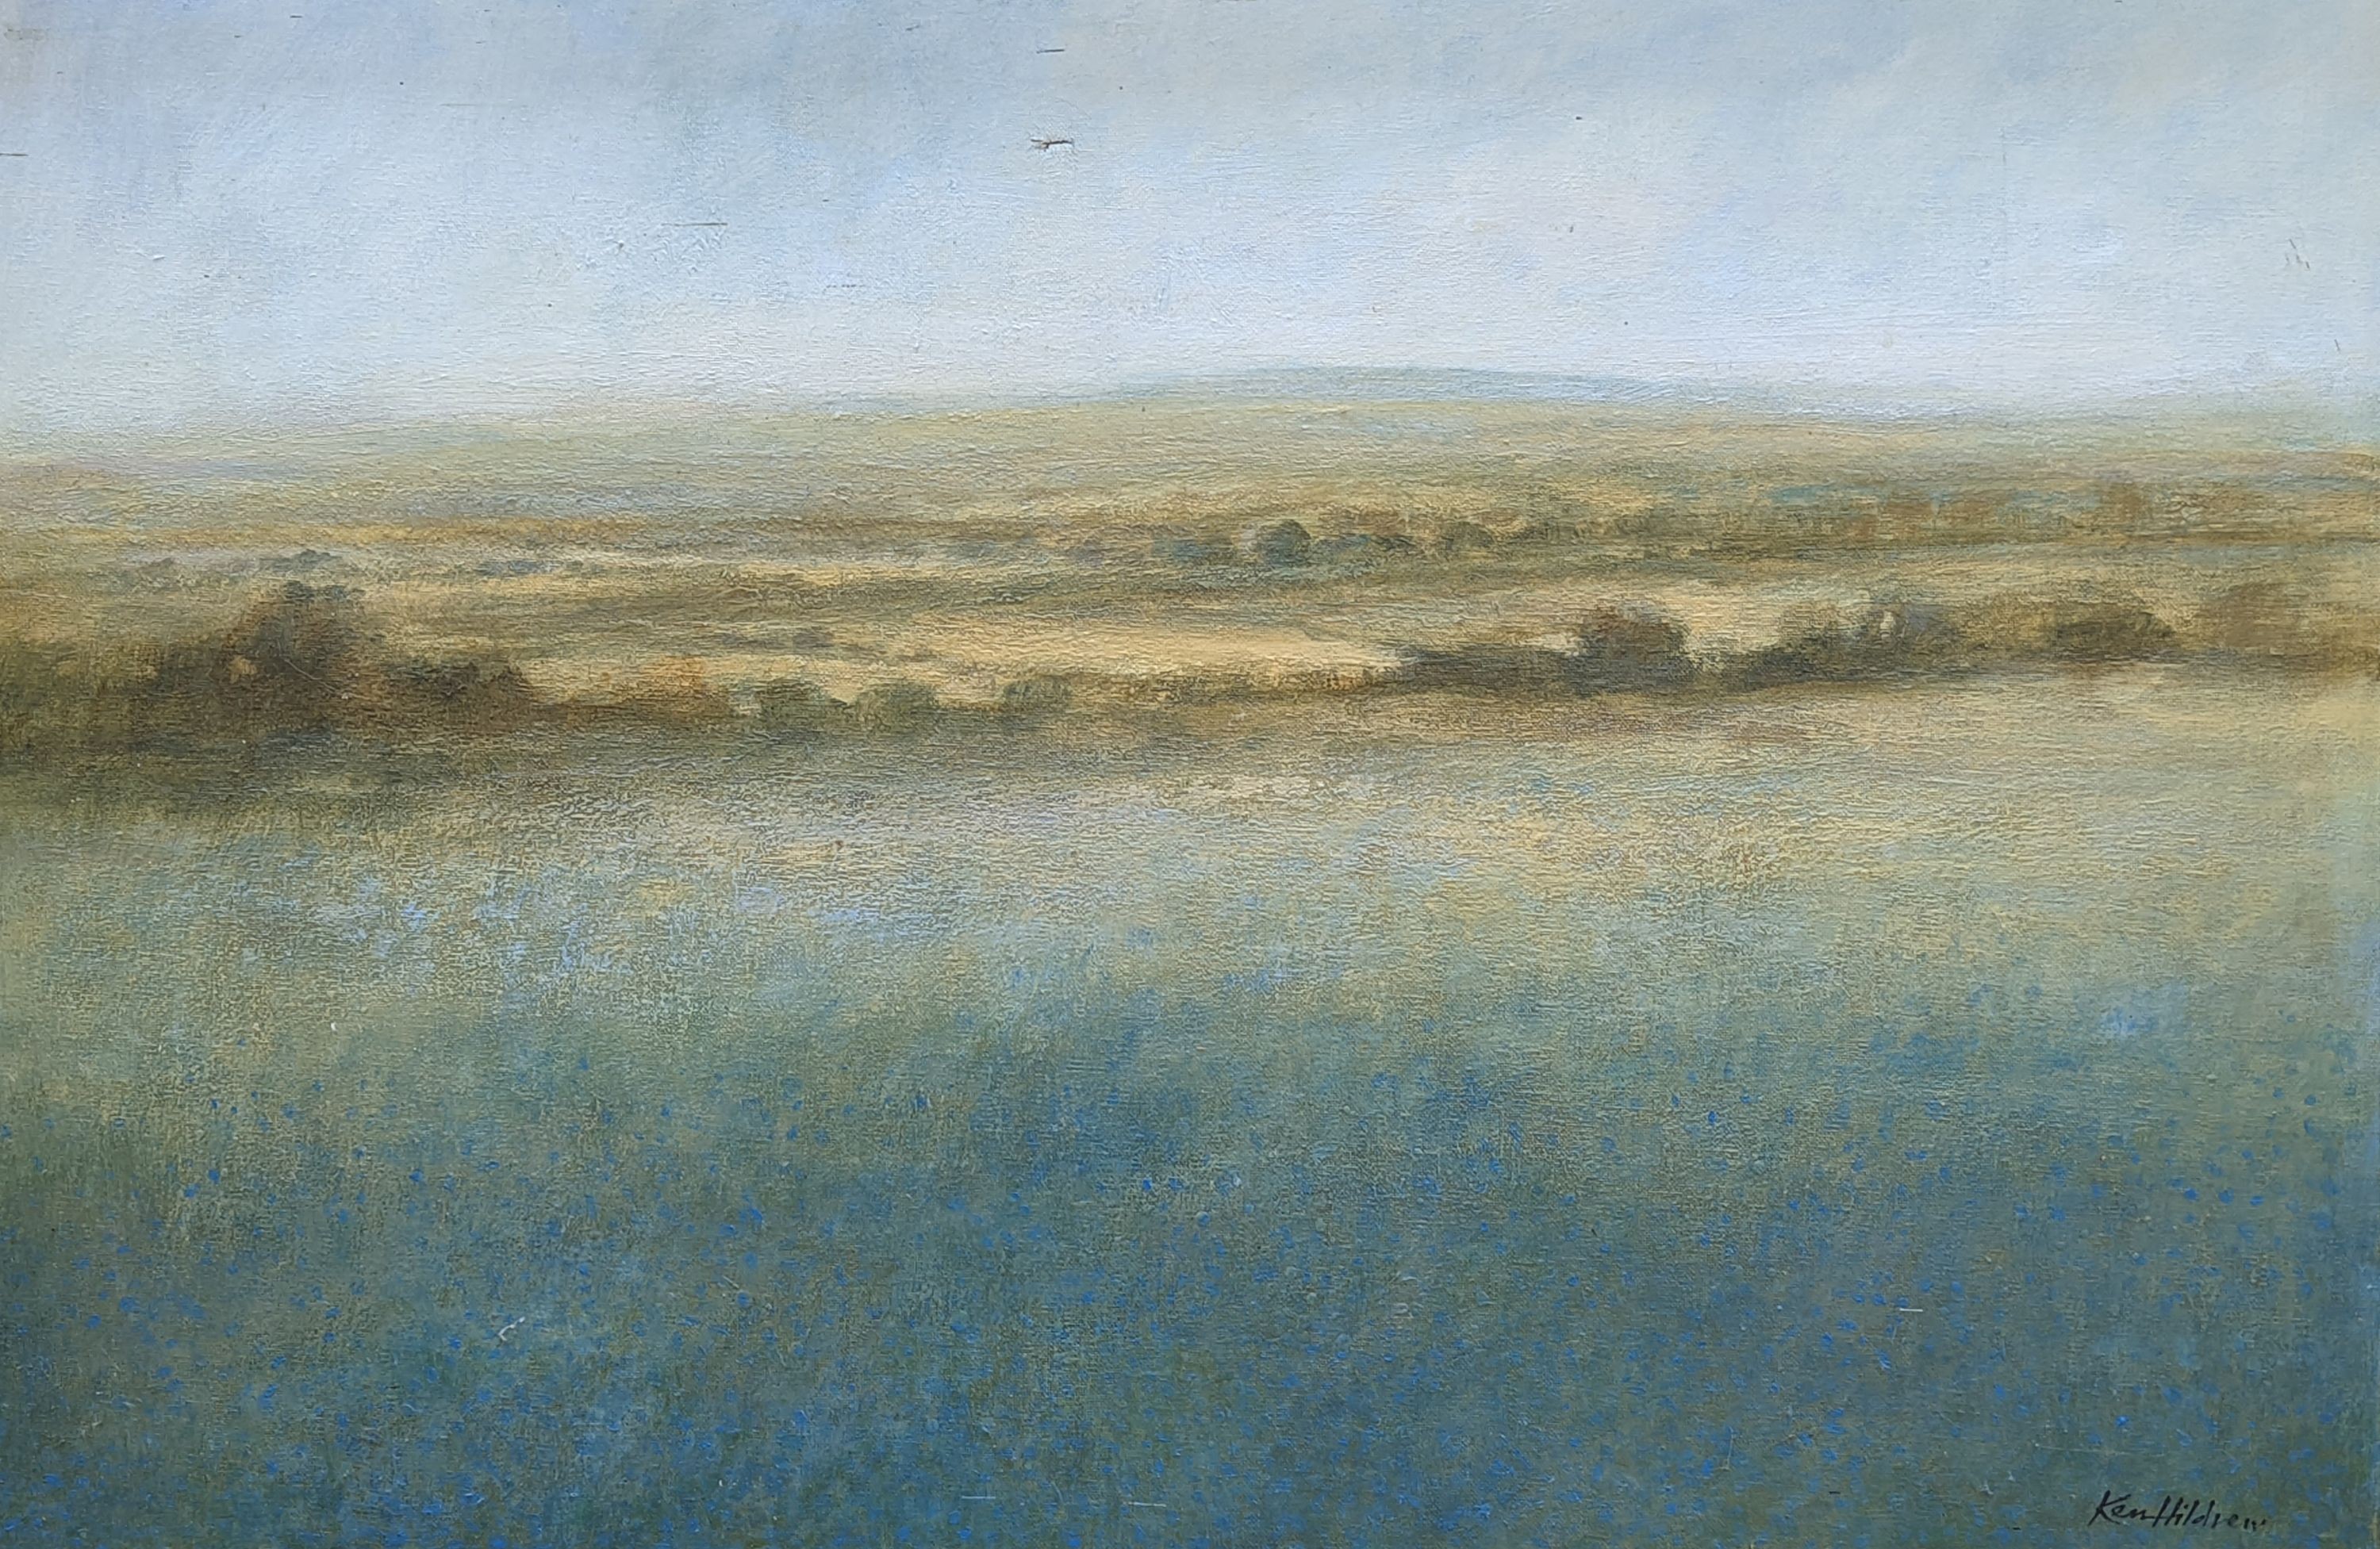 Ken Hildrew (1934-), oil on canvas, River landscape in summer, 60 x 92cm